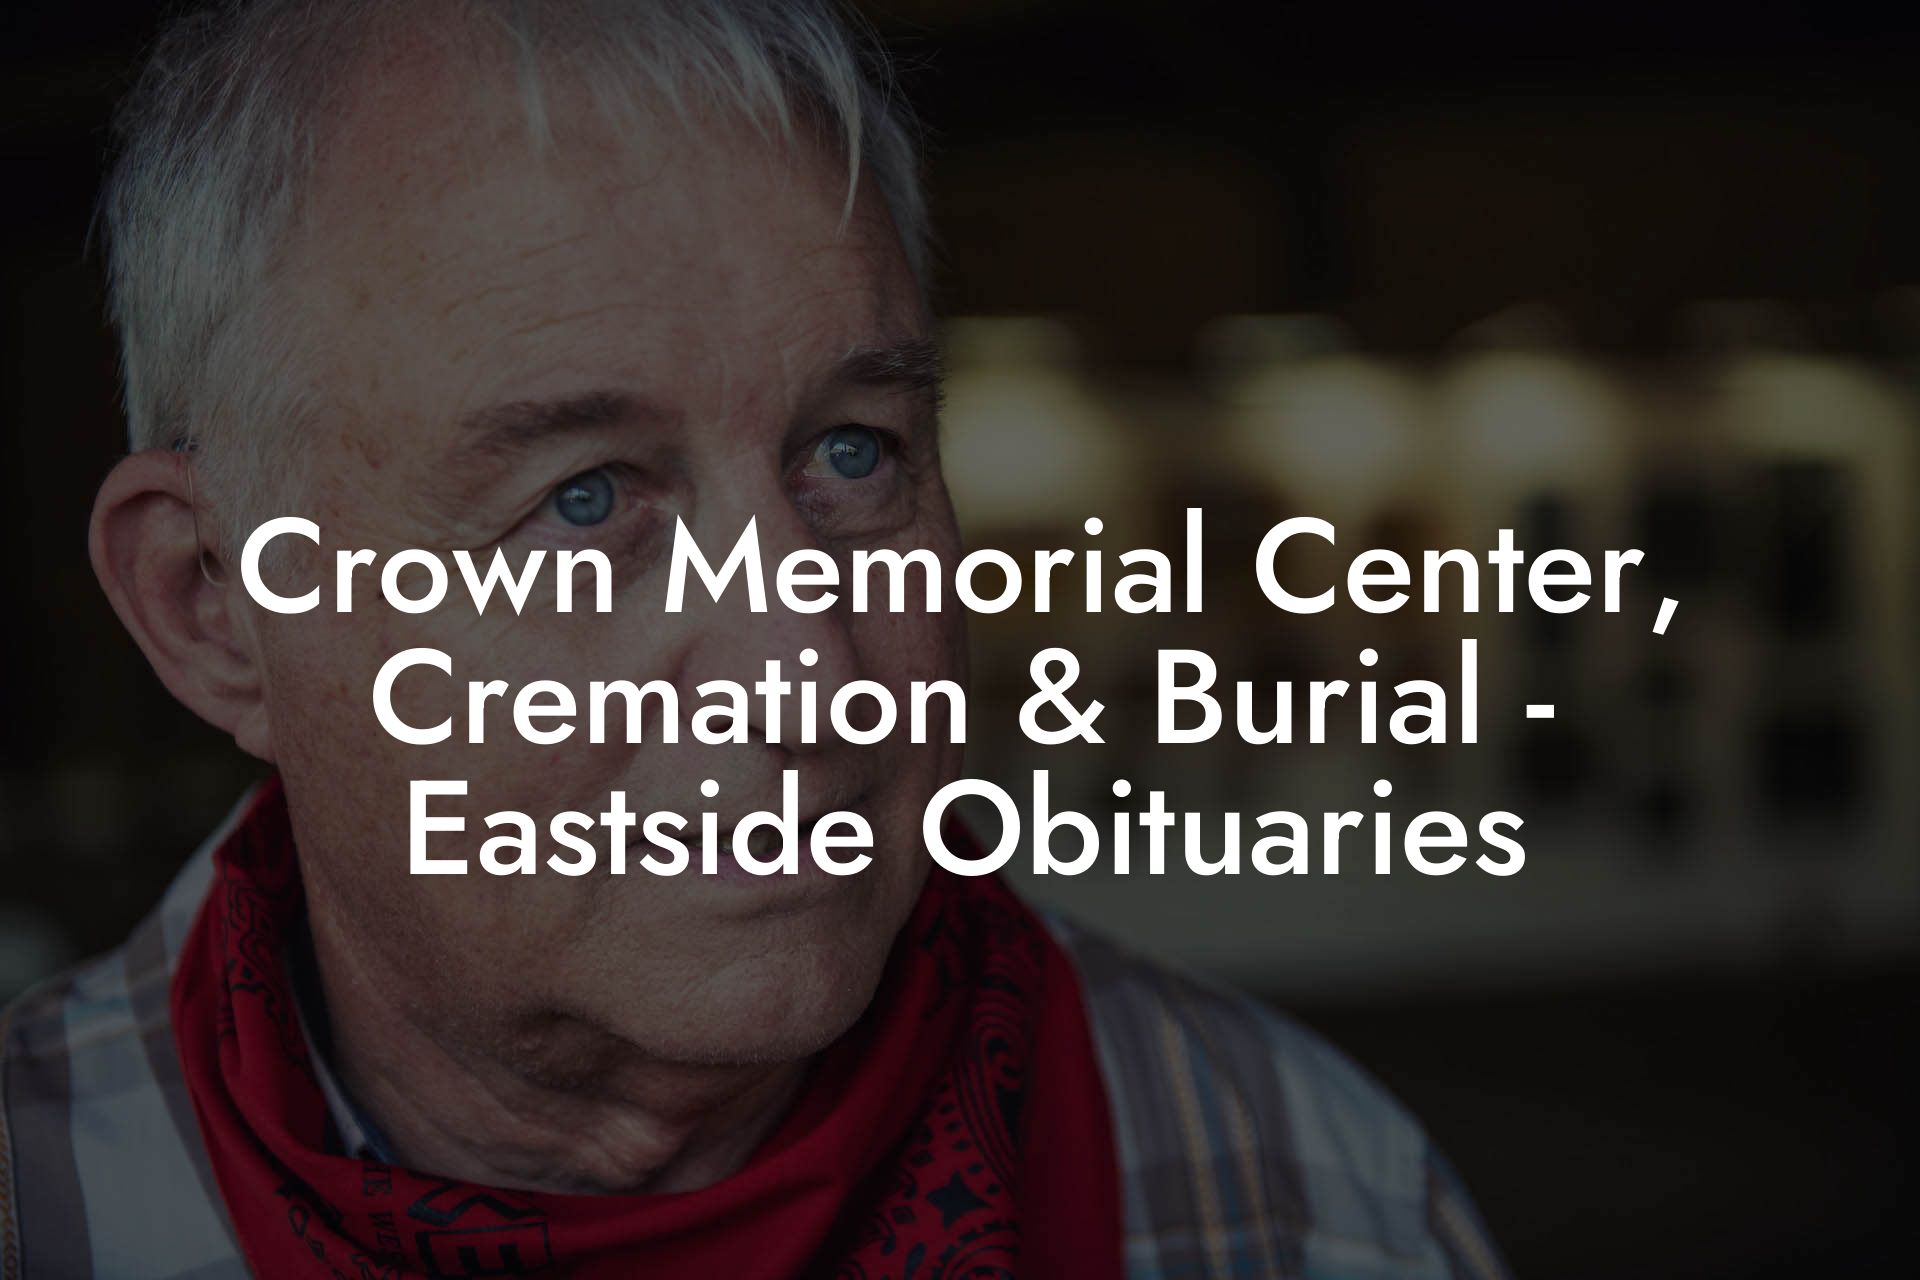 Crown Memorial Center, Cremation & Burial - Eastside Obituaries